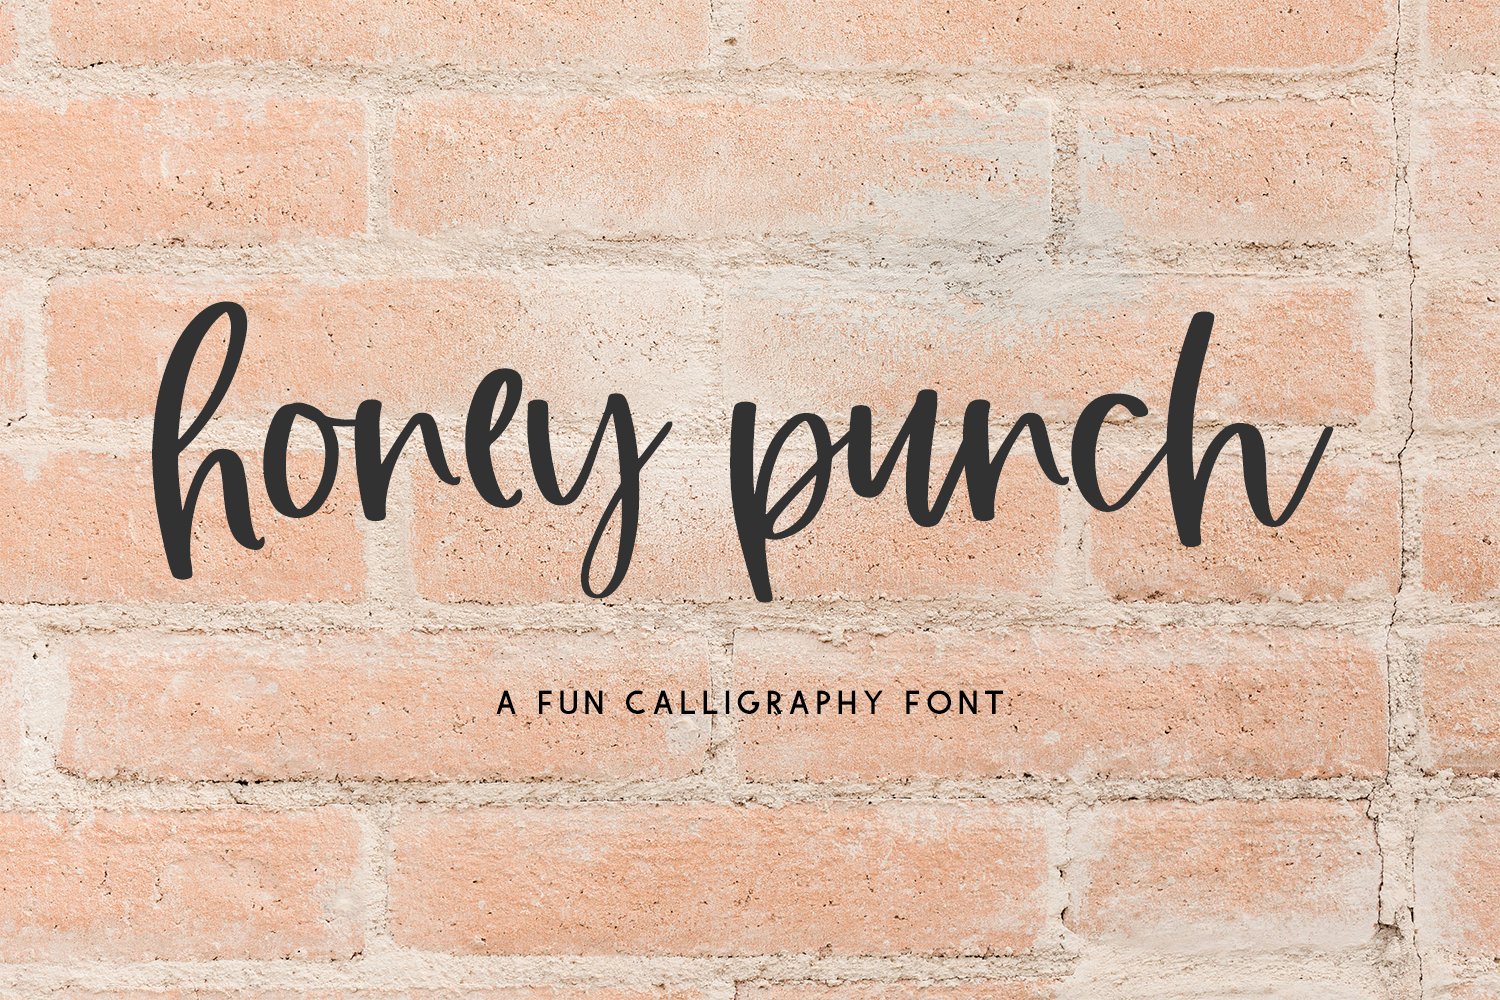 Honey Punch Script cover image.